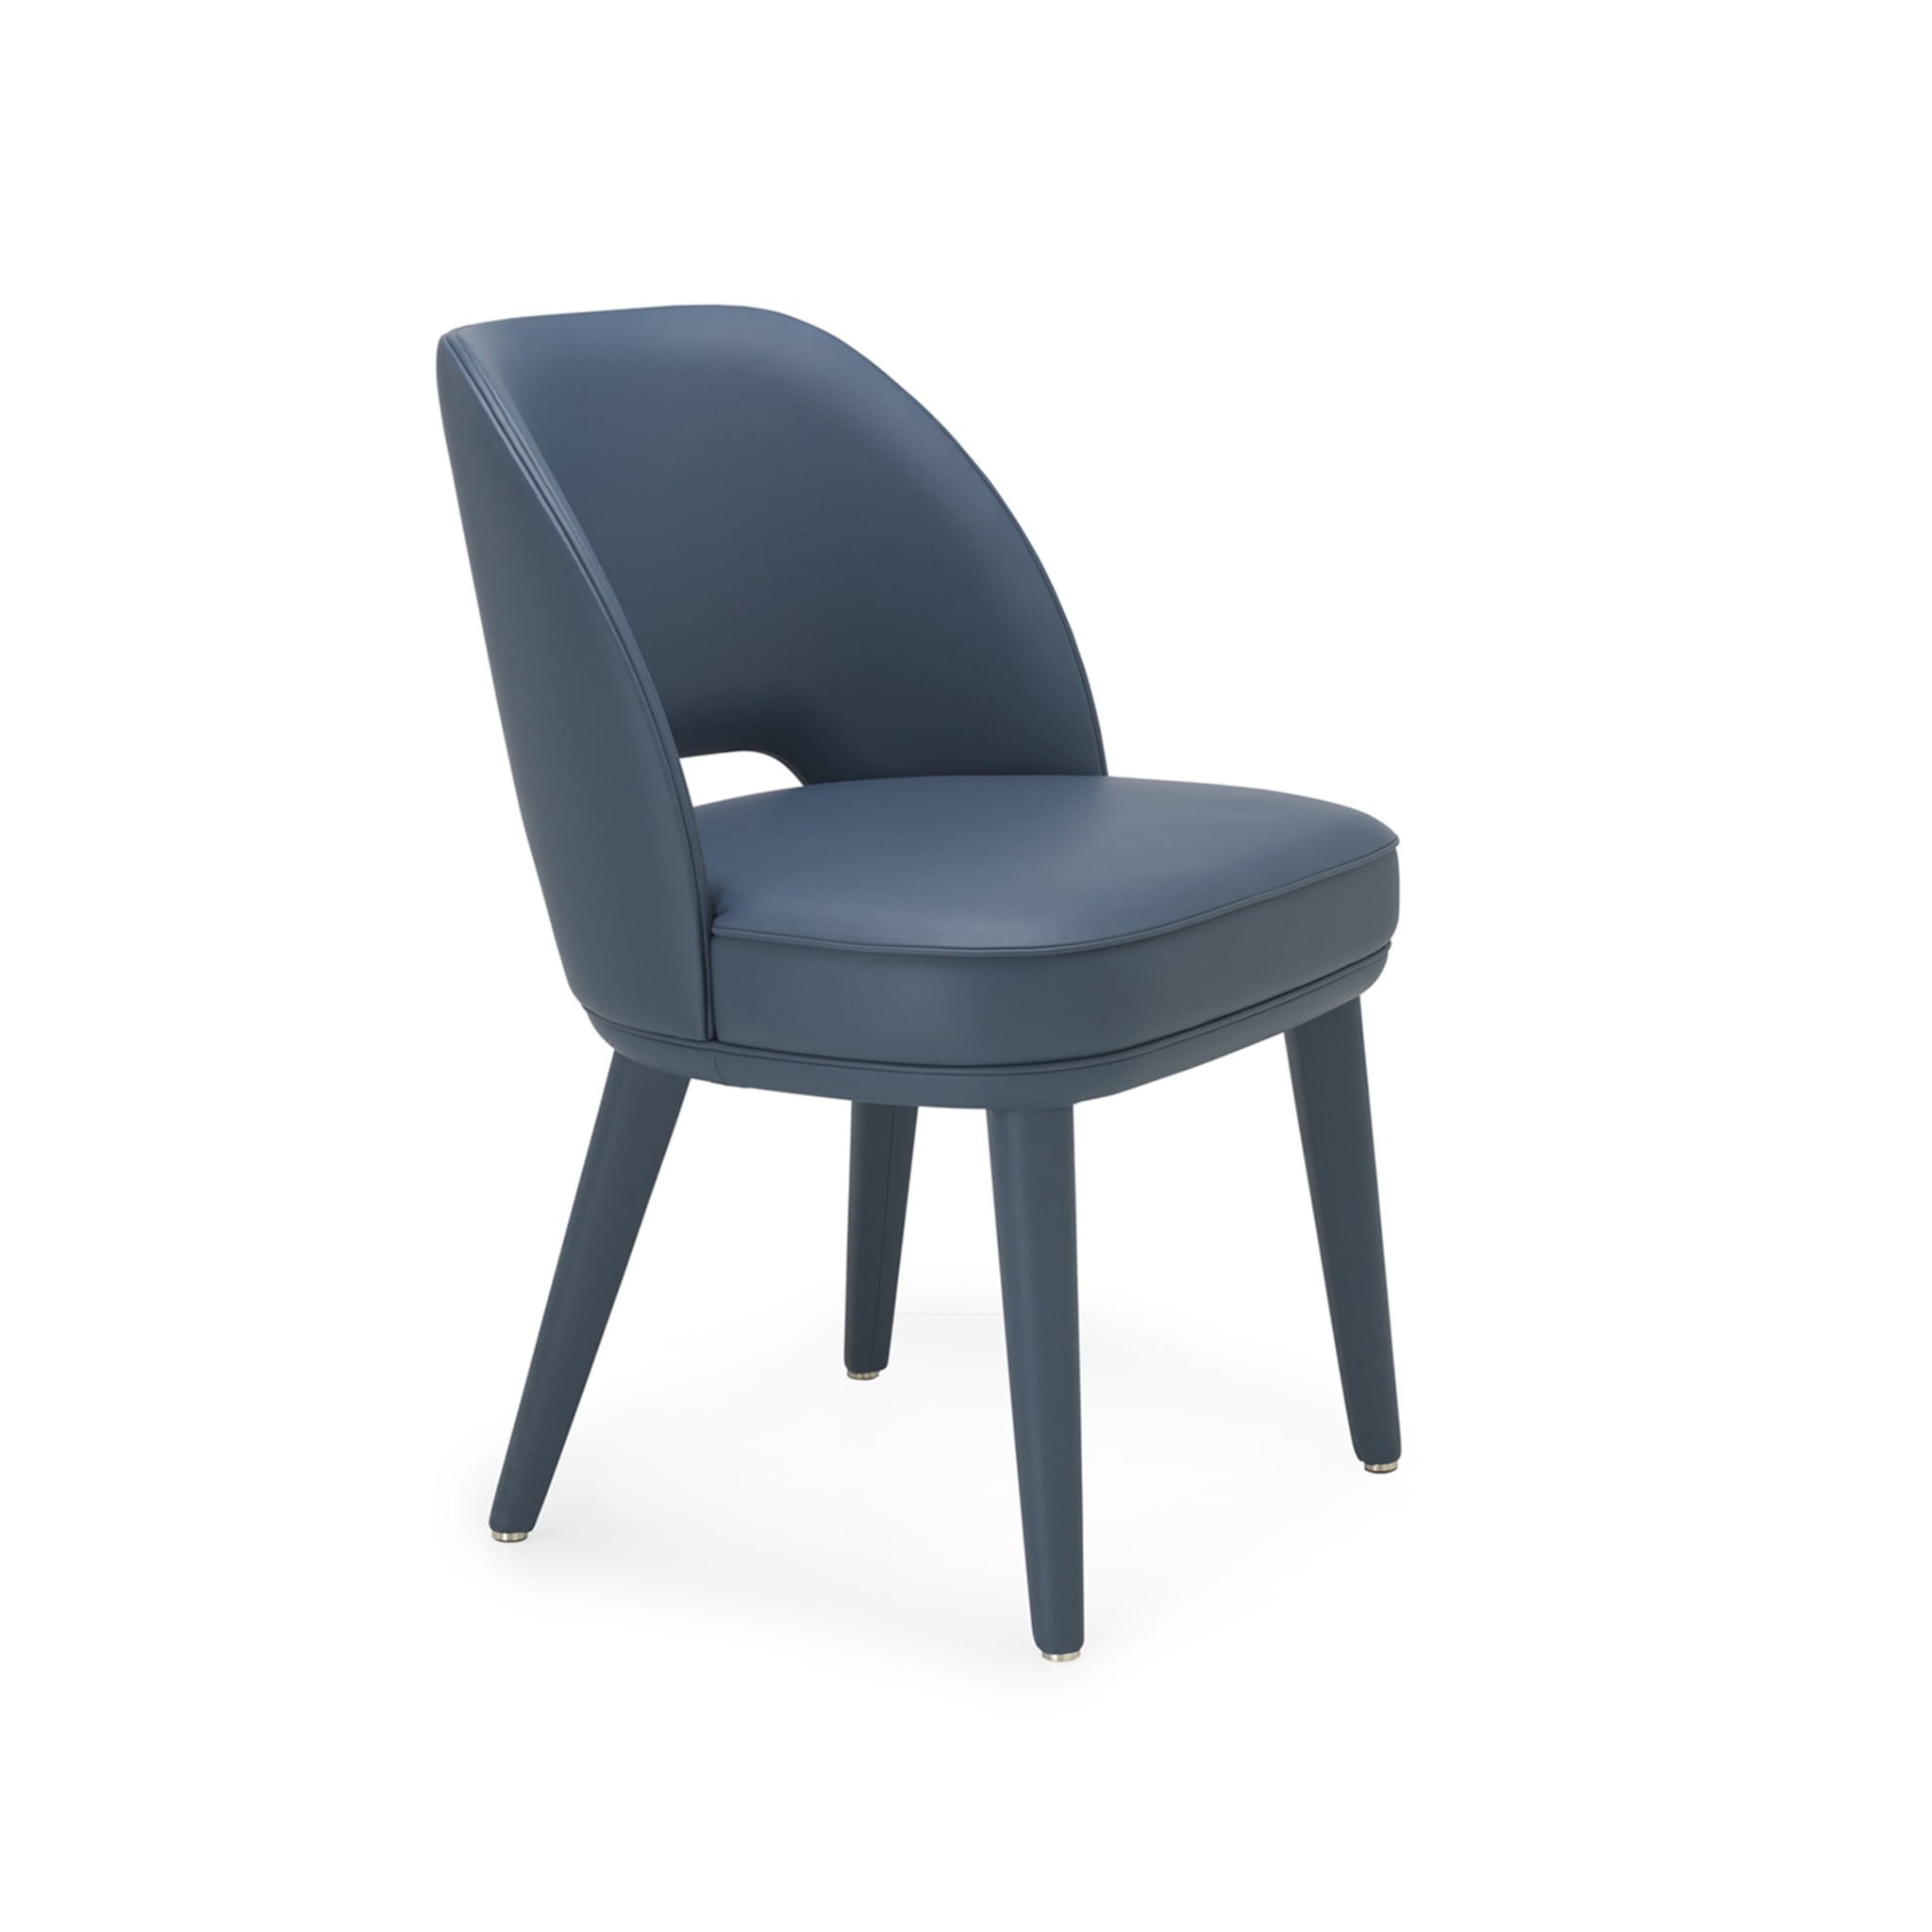 PENELOPE blue chair - Alternative view 1